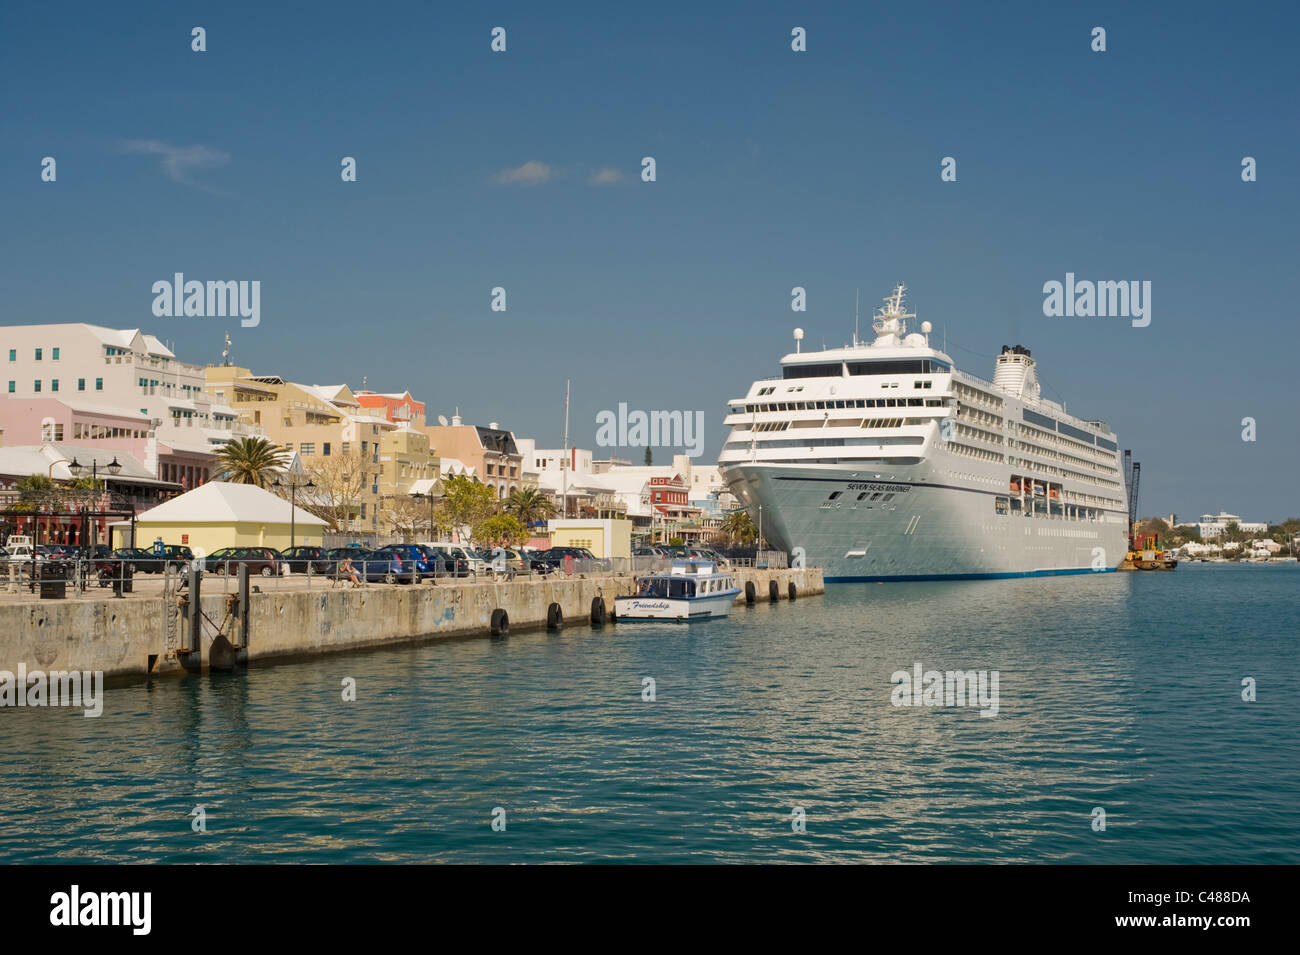 Cruise ship 'Seven Seas Mariner' docked in Hamilton Harbour, Bermuda. Stock Photo